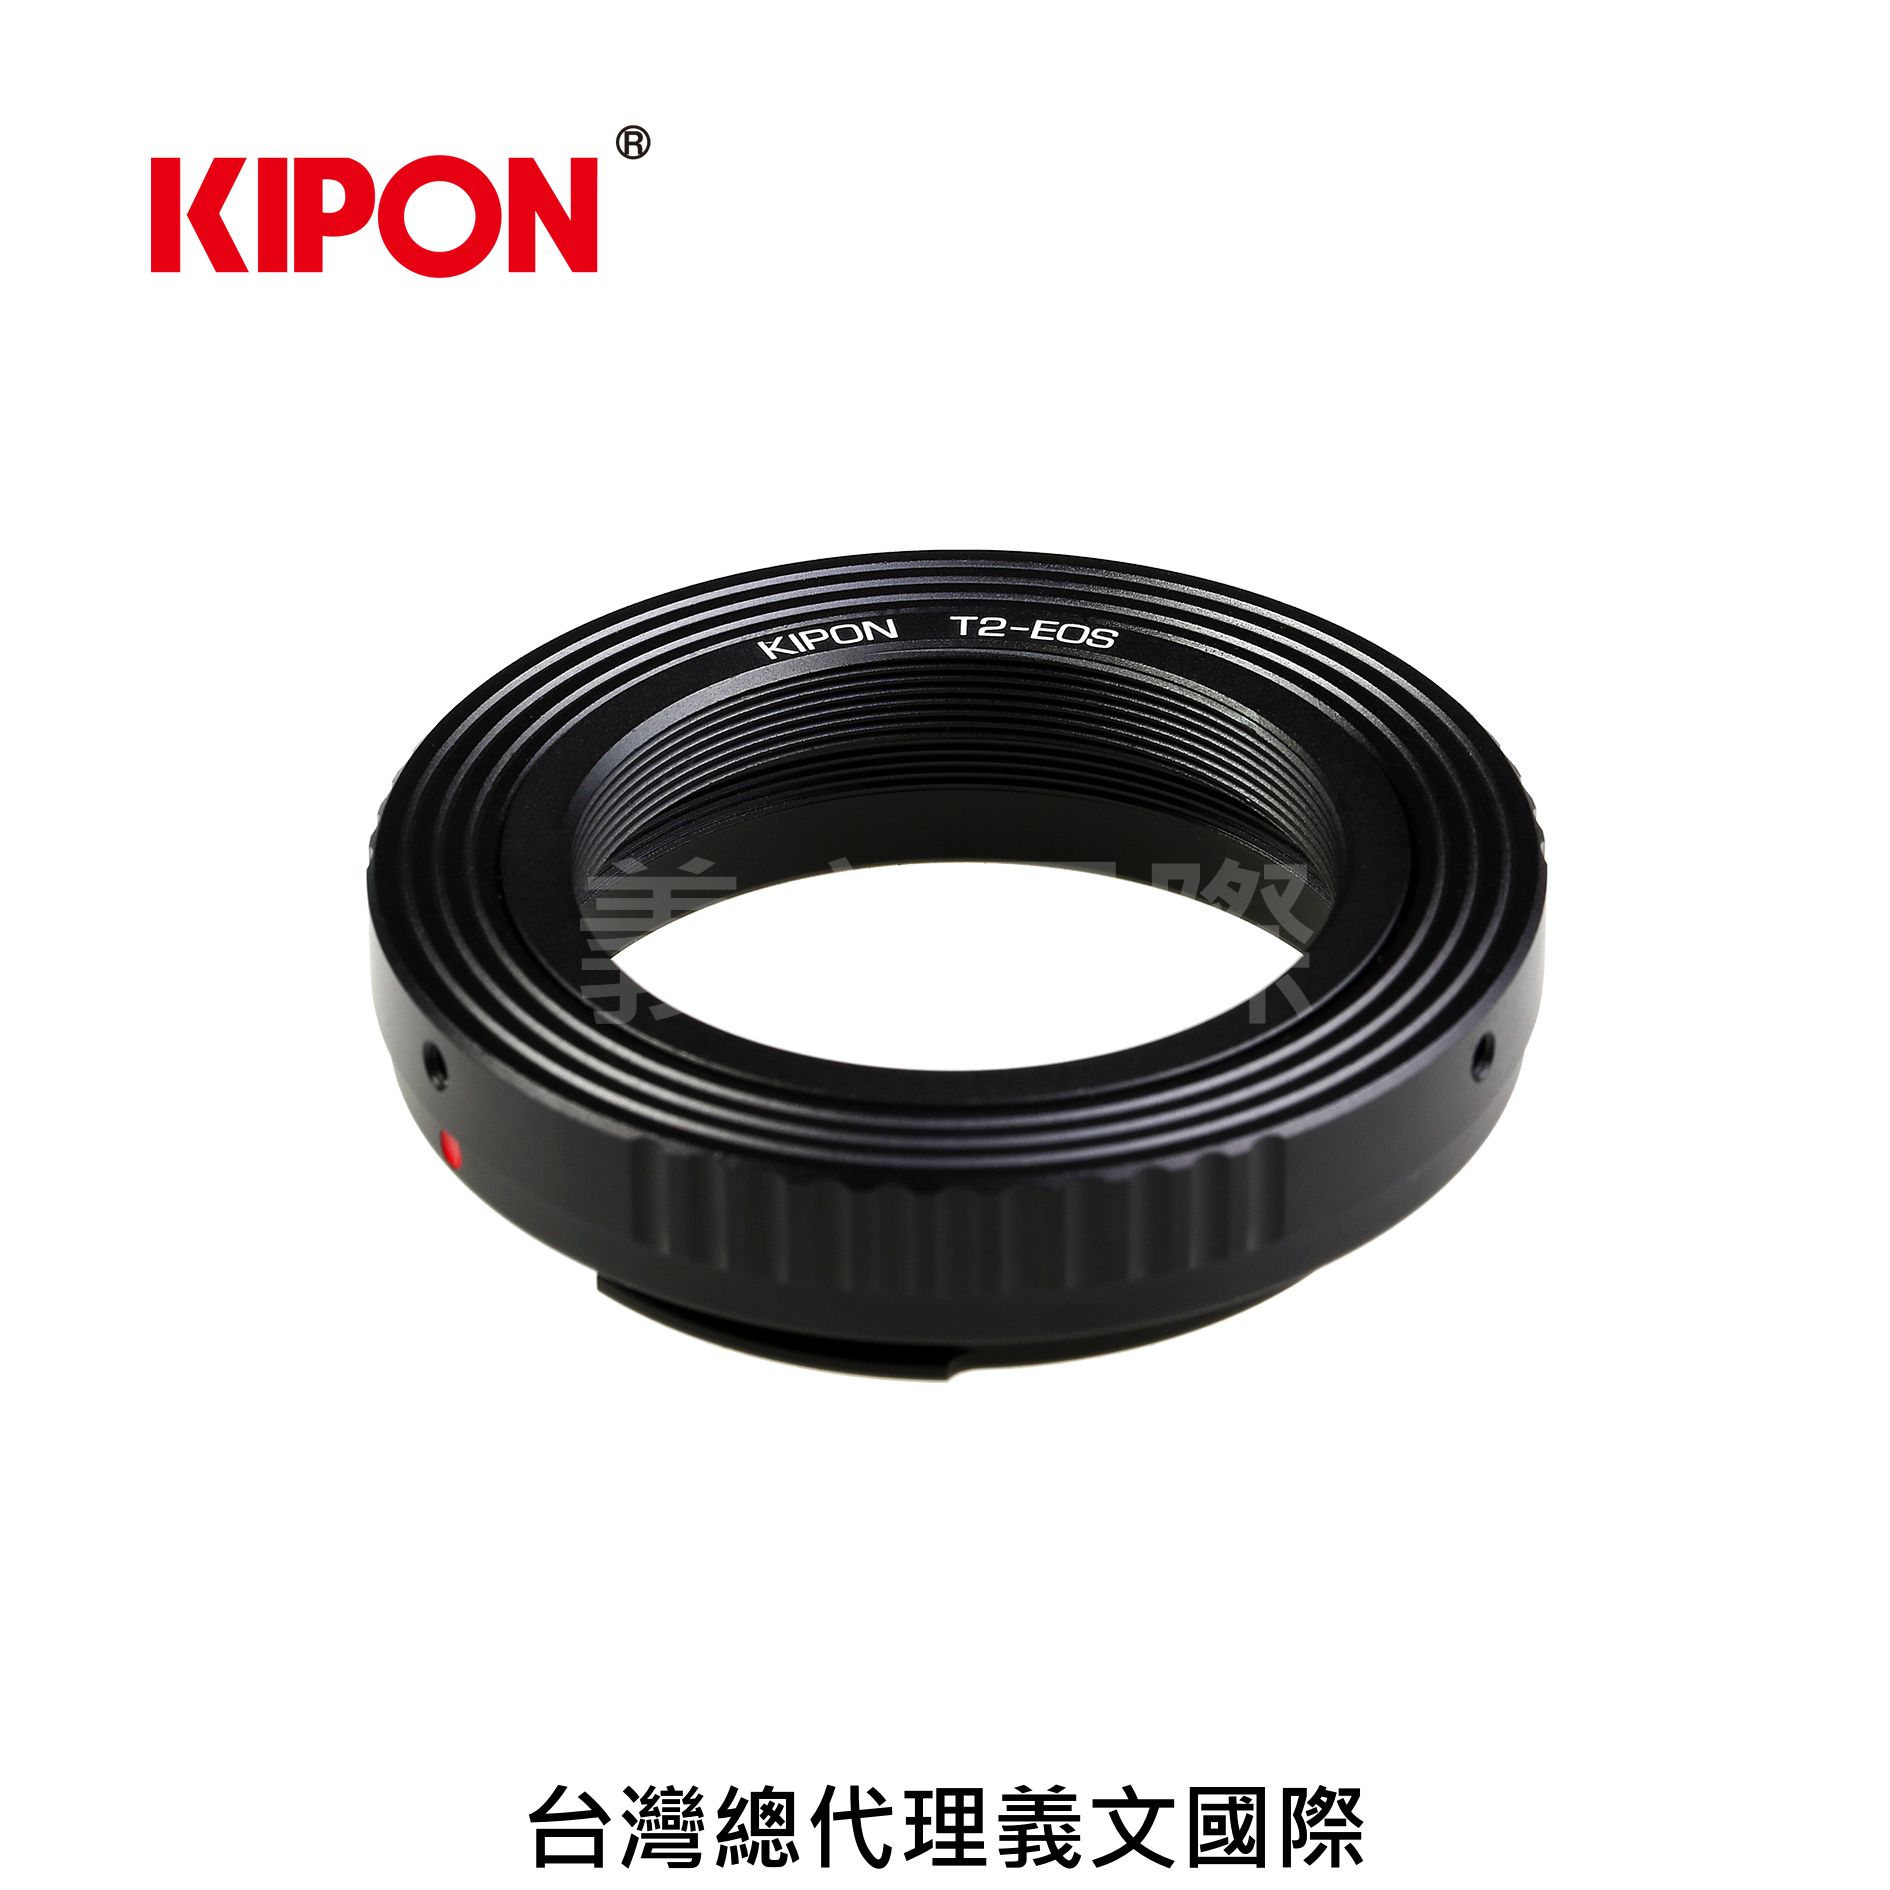 Kipon轉接環專賣店:T2-CANON AF(佳能,EOS,EF)